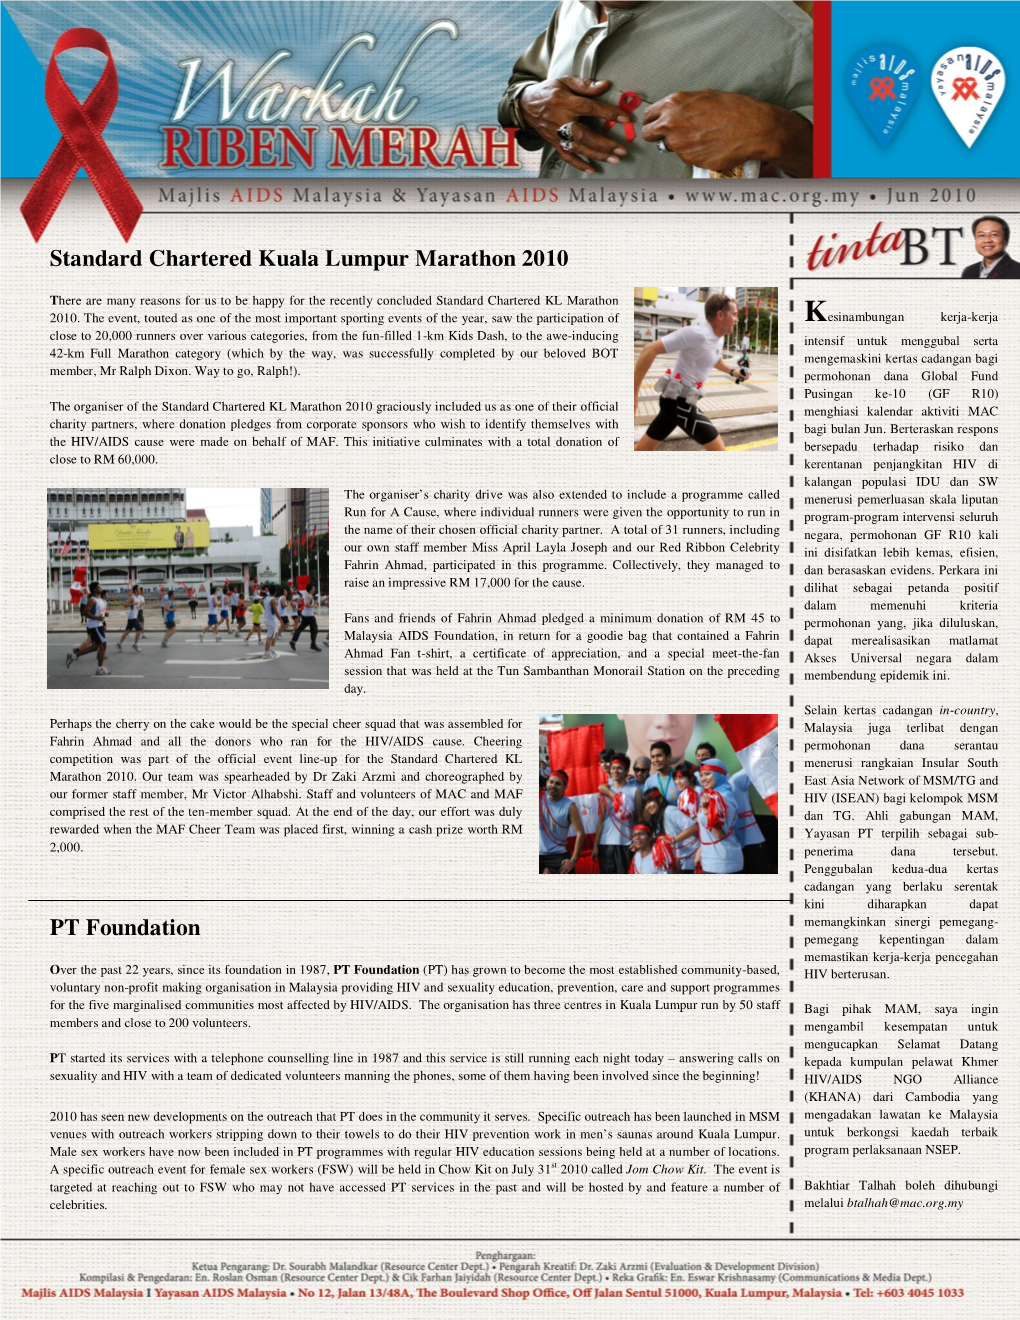 Standard Chartered Kuala Lumpur Marathon 2010 PT Foundation